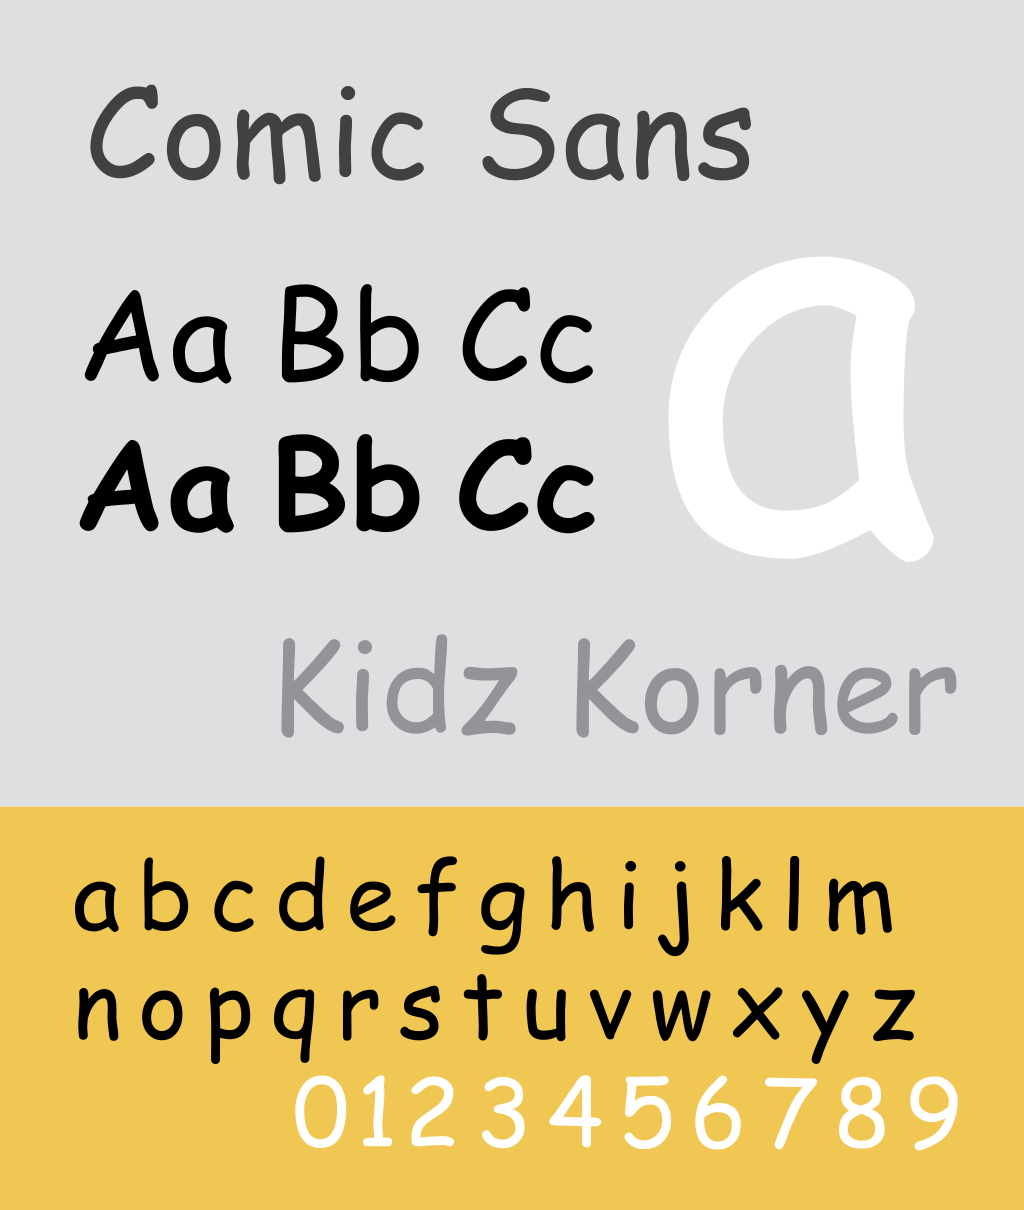 Alphabet written in the Comic Sans font.